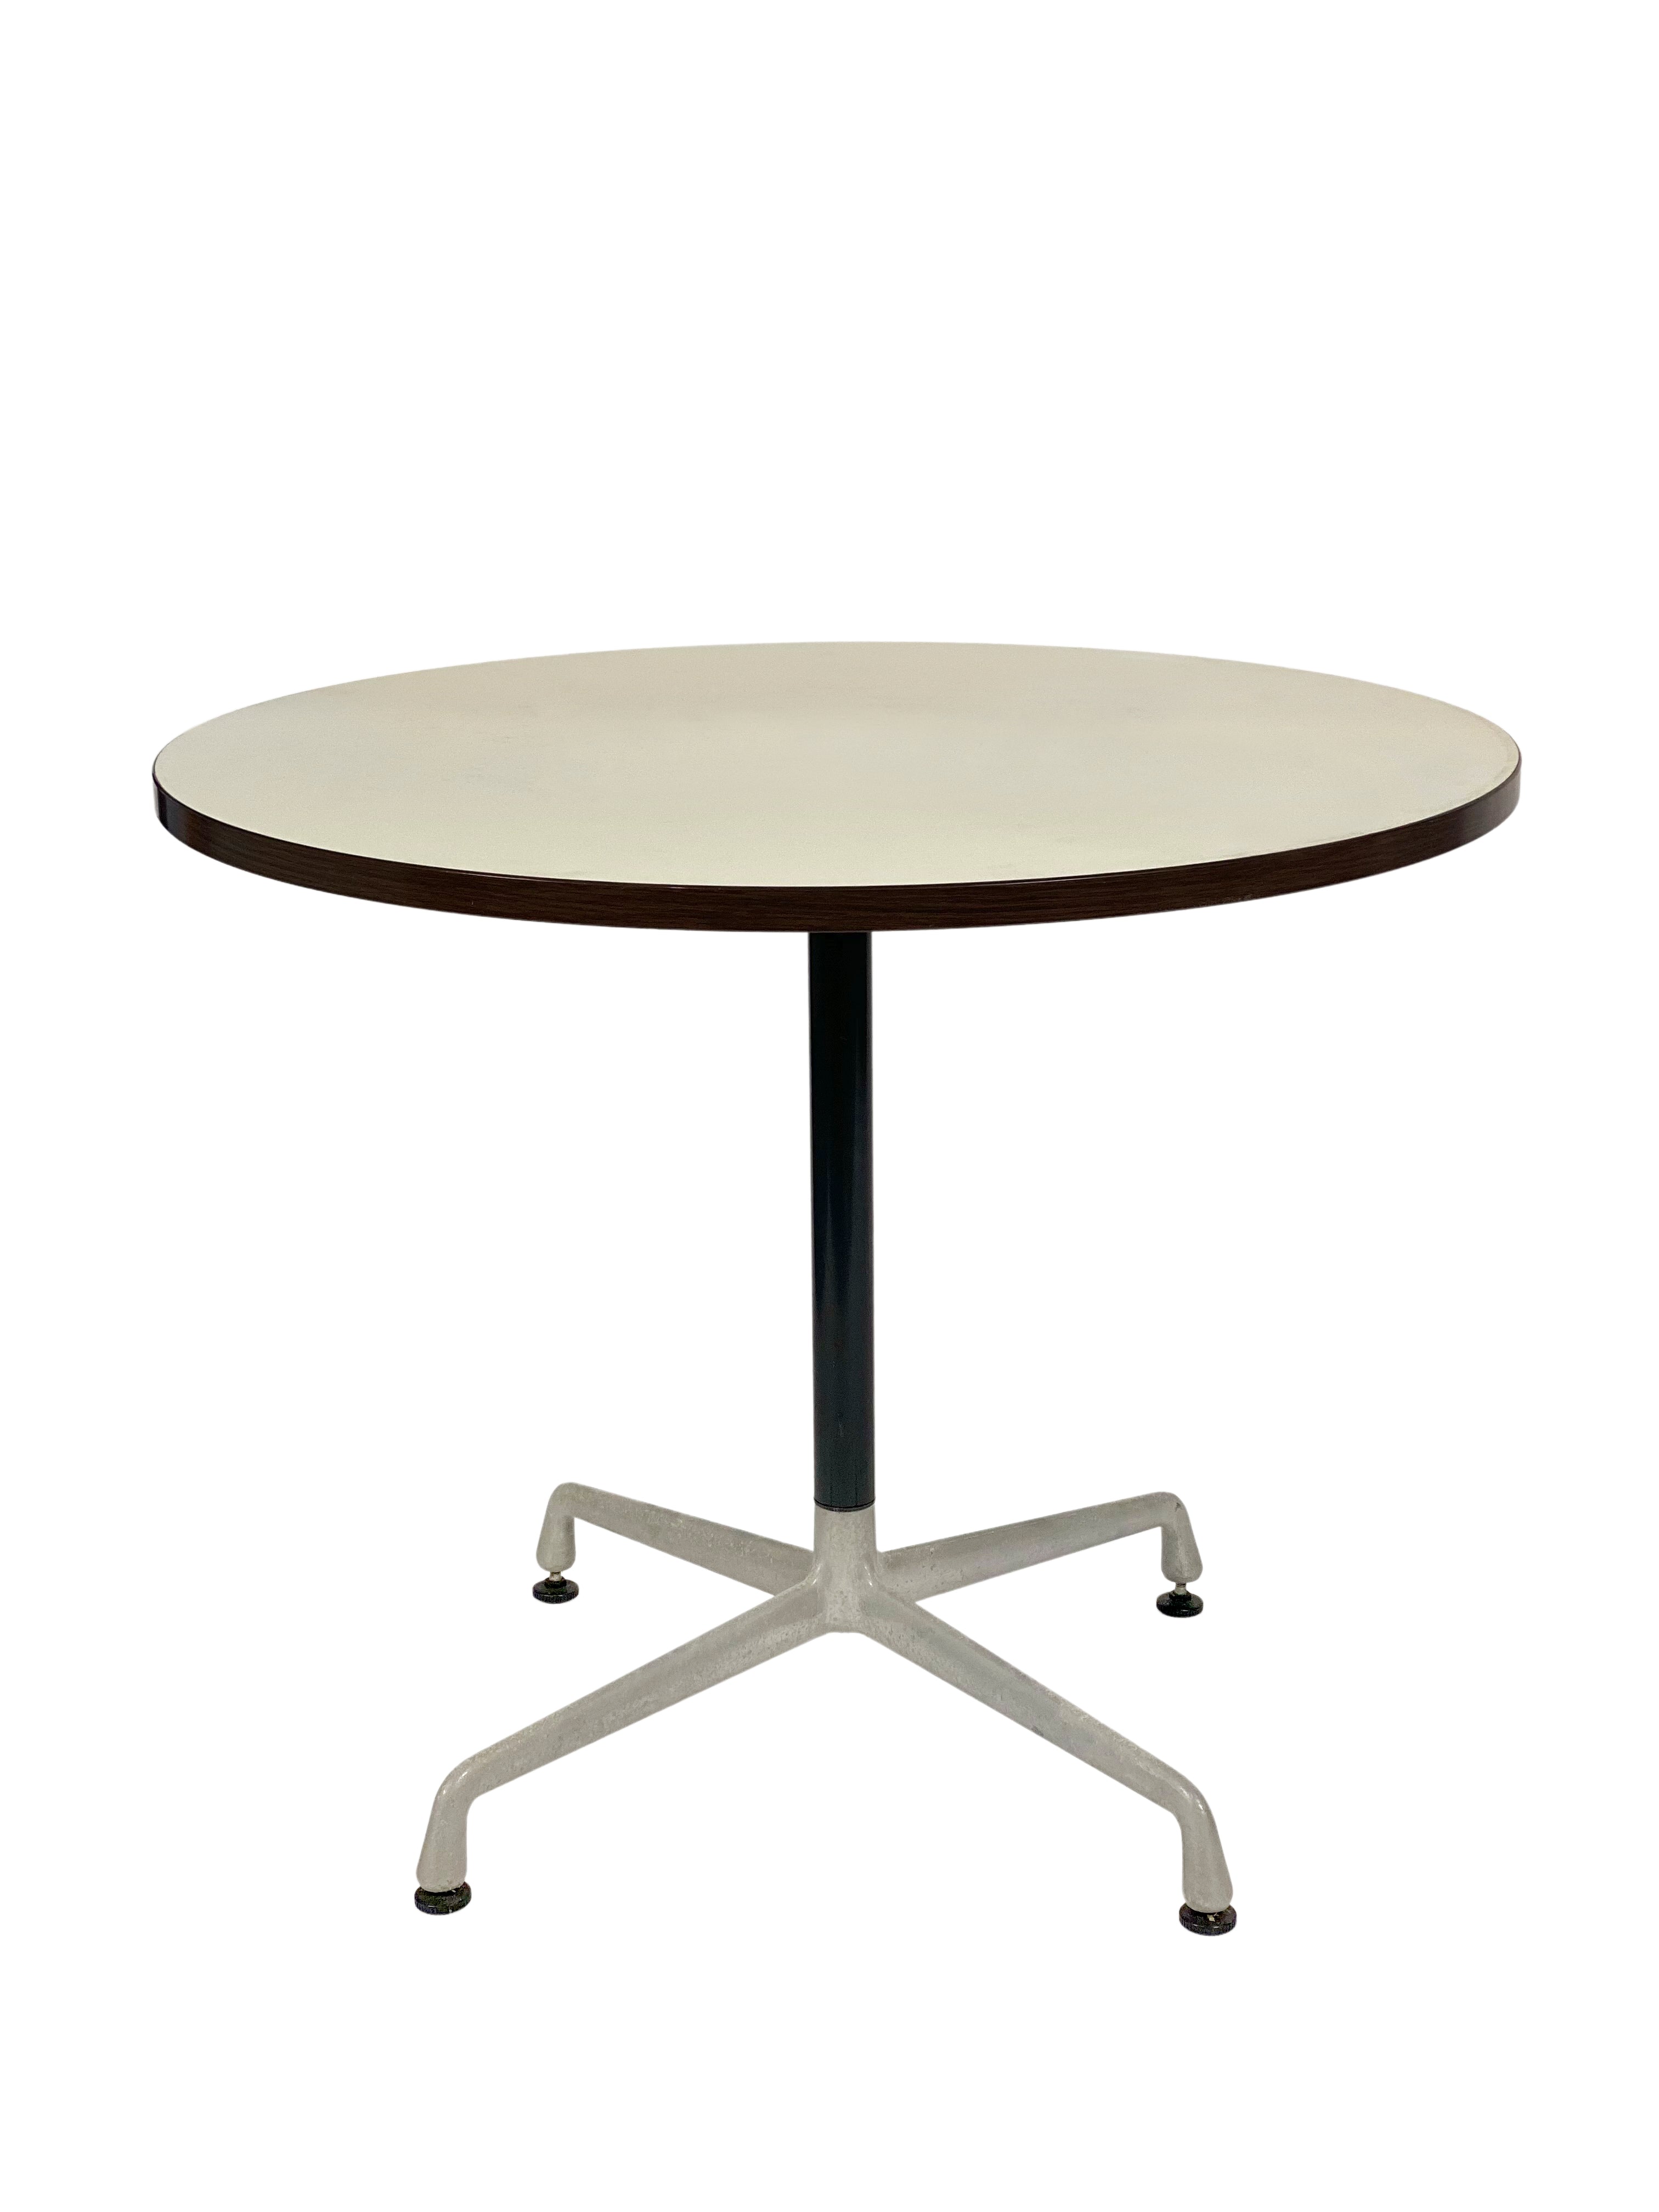 Eames Universal Table